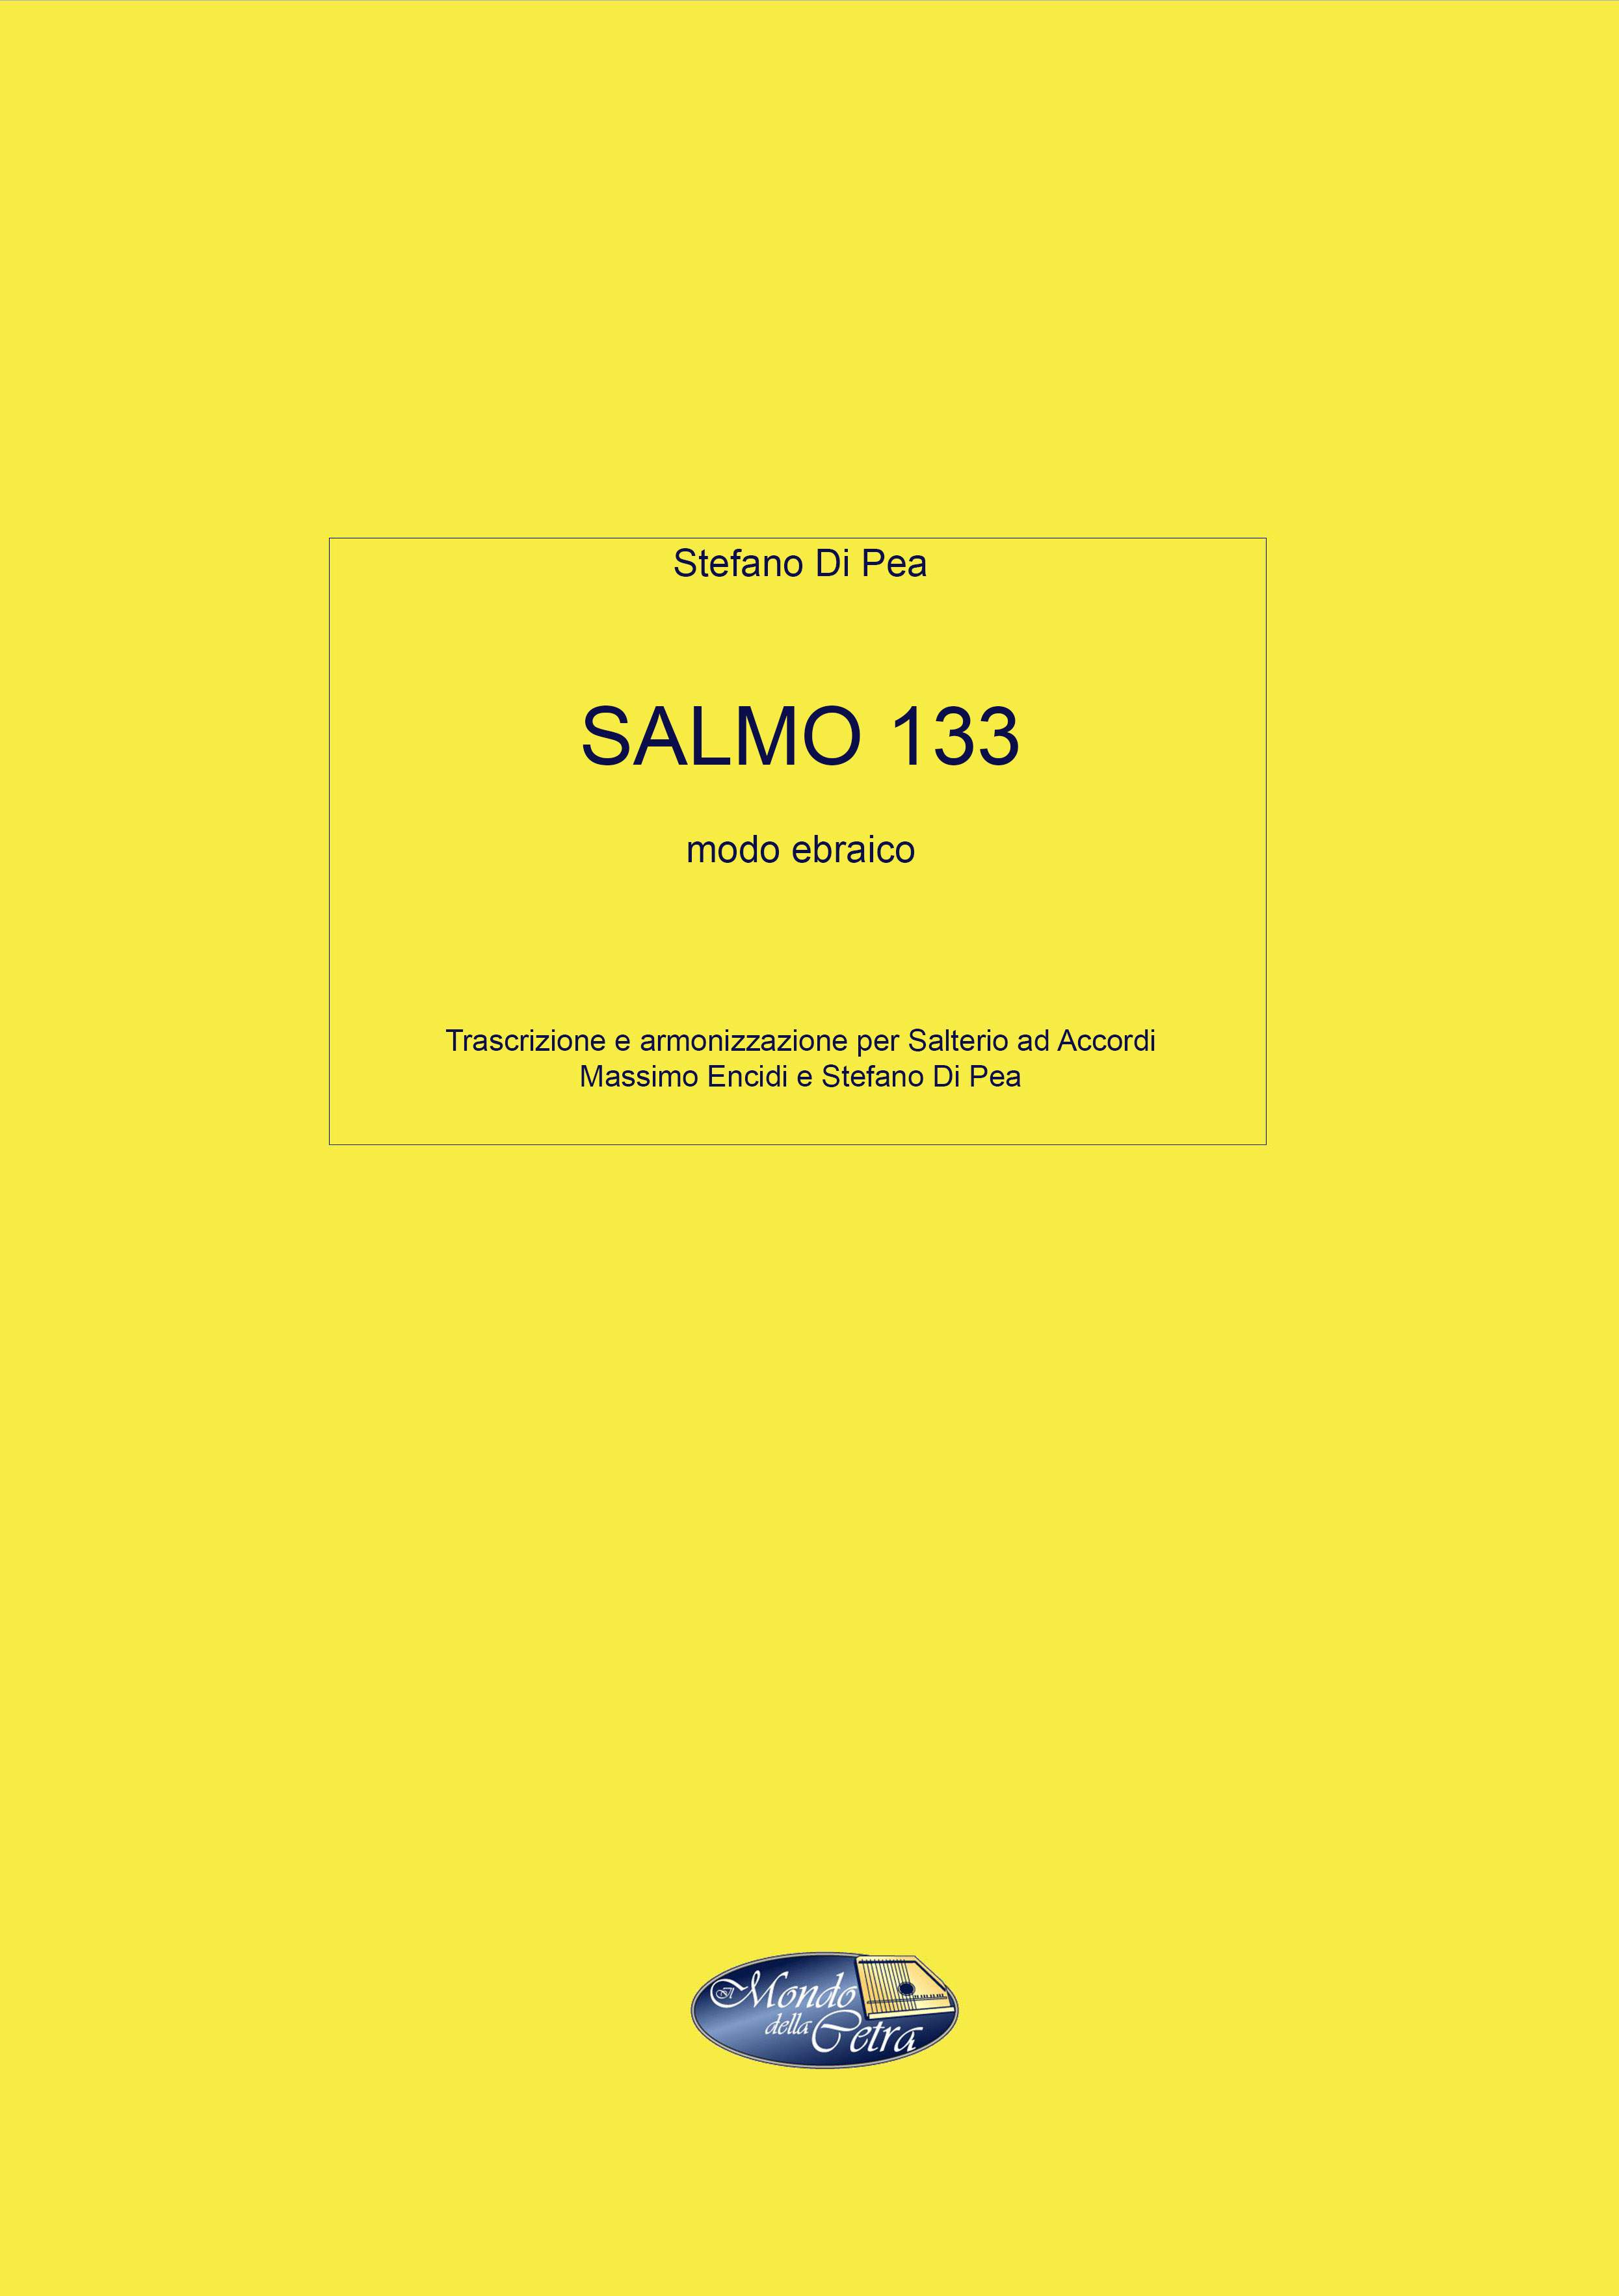 SALMO 133 (Tono Ebraico)